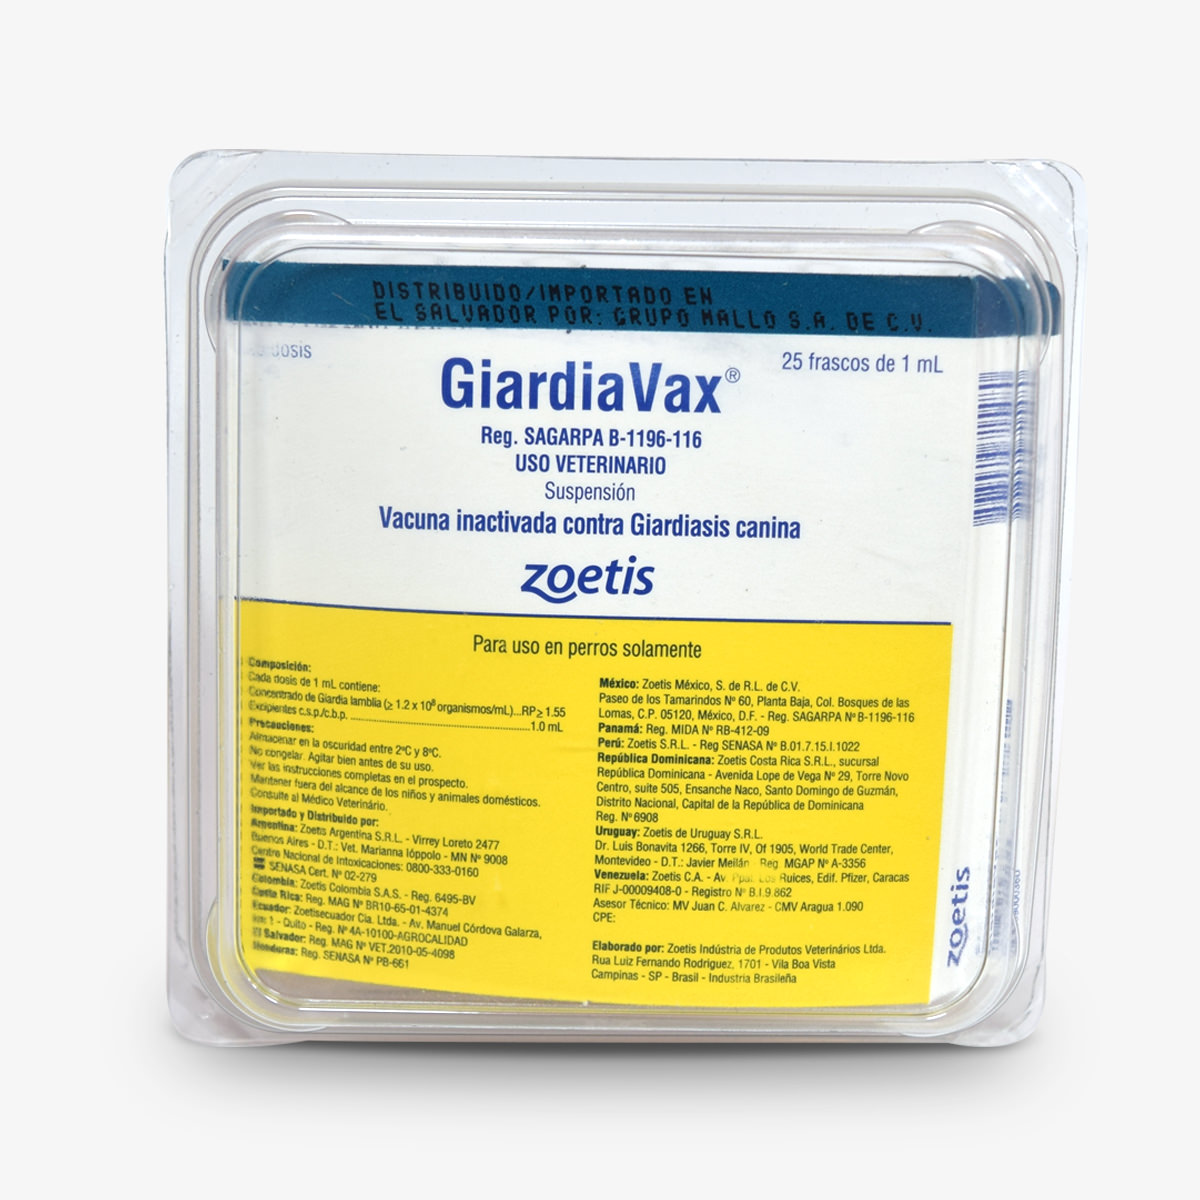 Giardiavax eficacia, Nifuroksadid contra Giardia